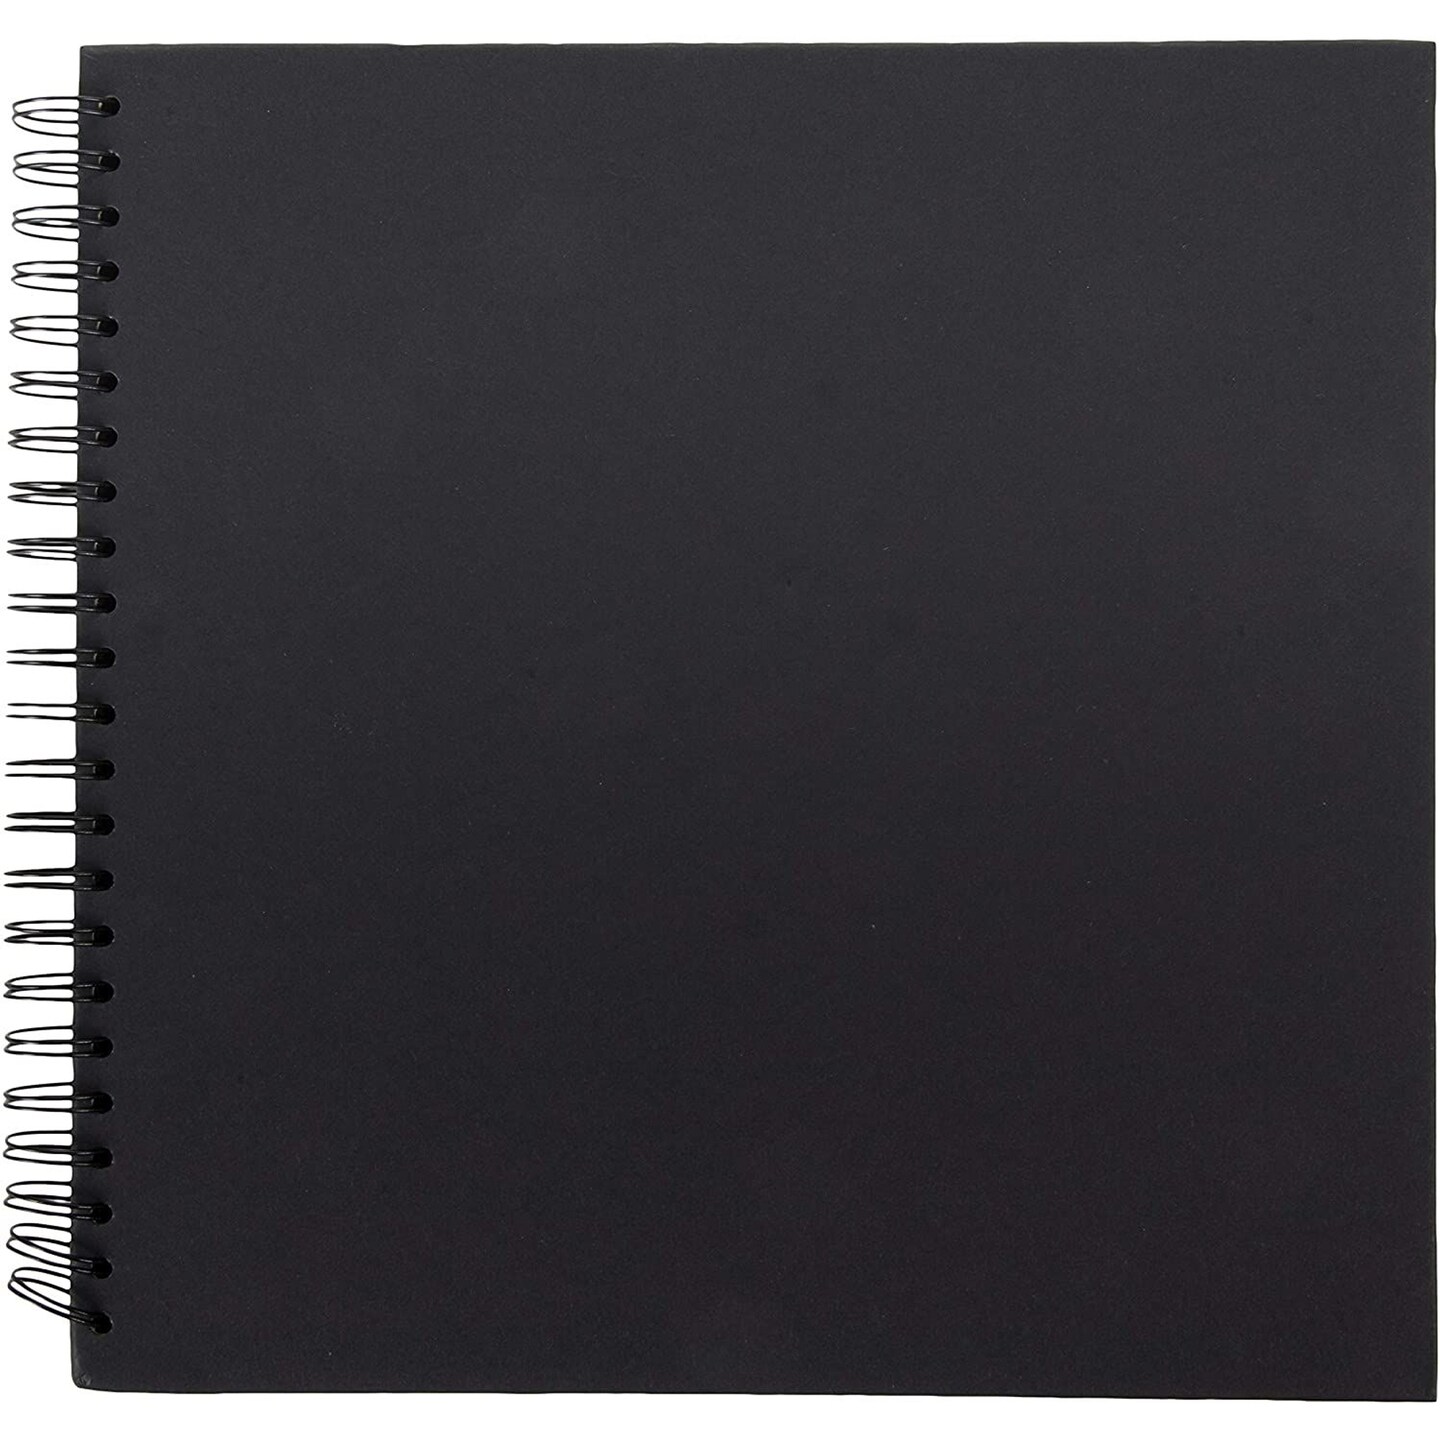 Blank Hardcover 12x12 Scrapbook Album for Photos, Black Spiral